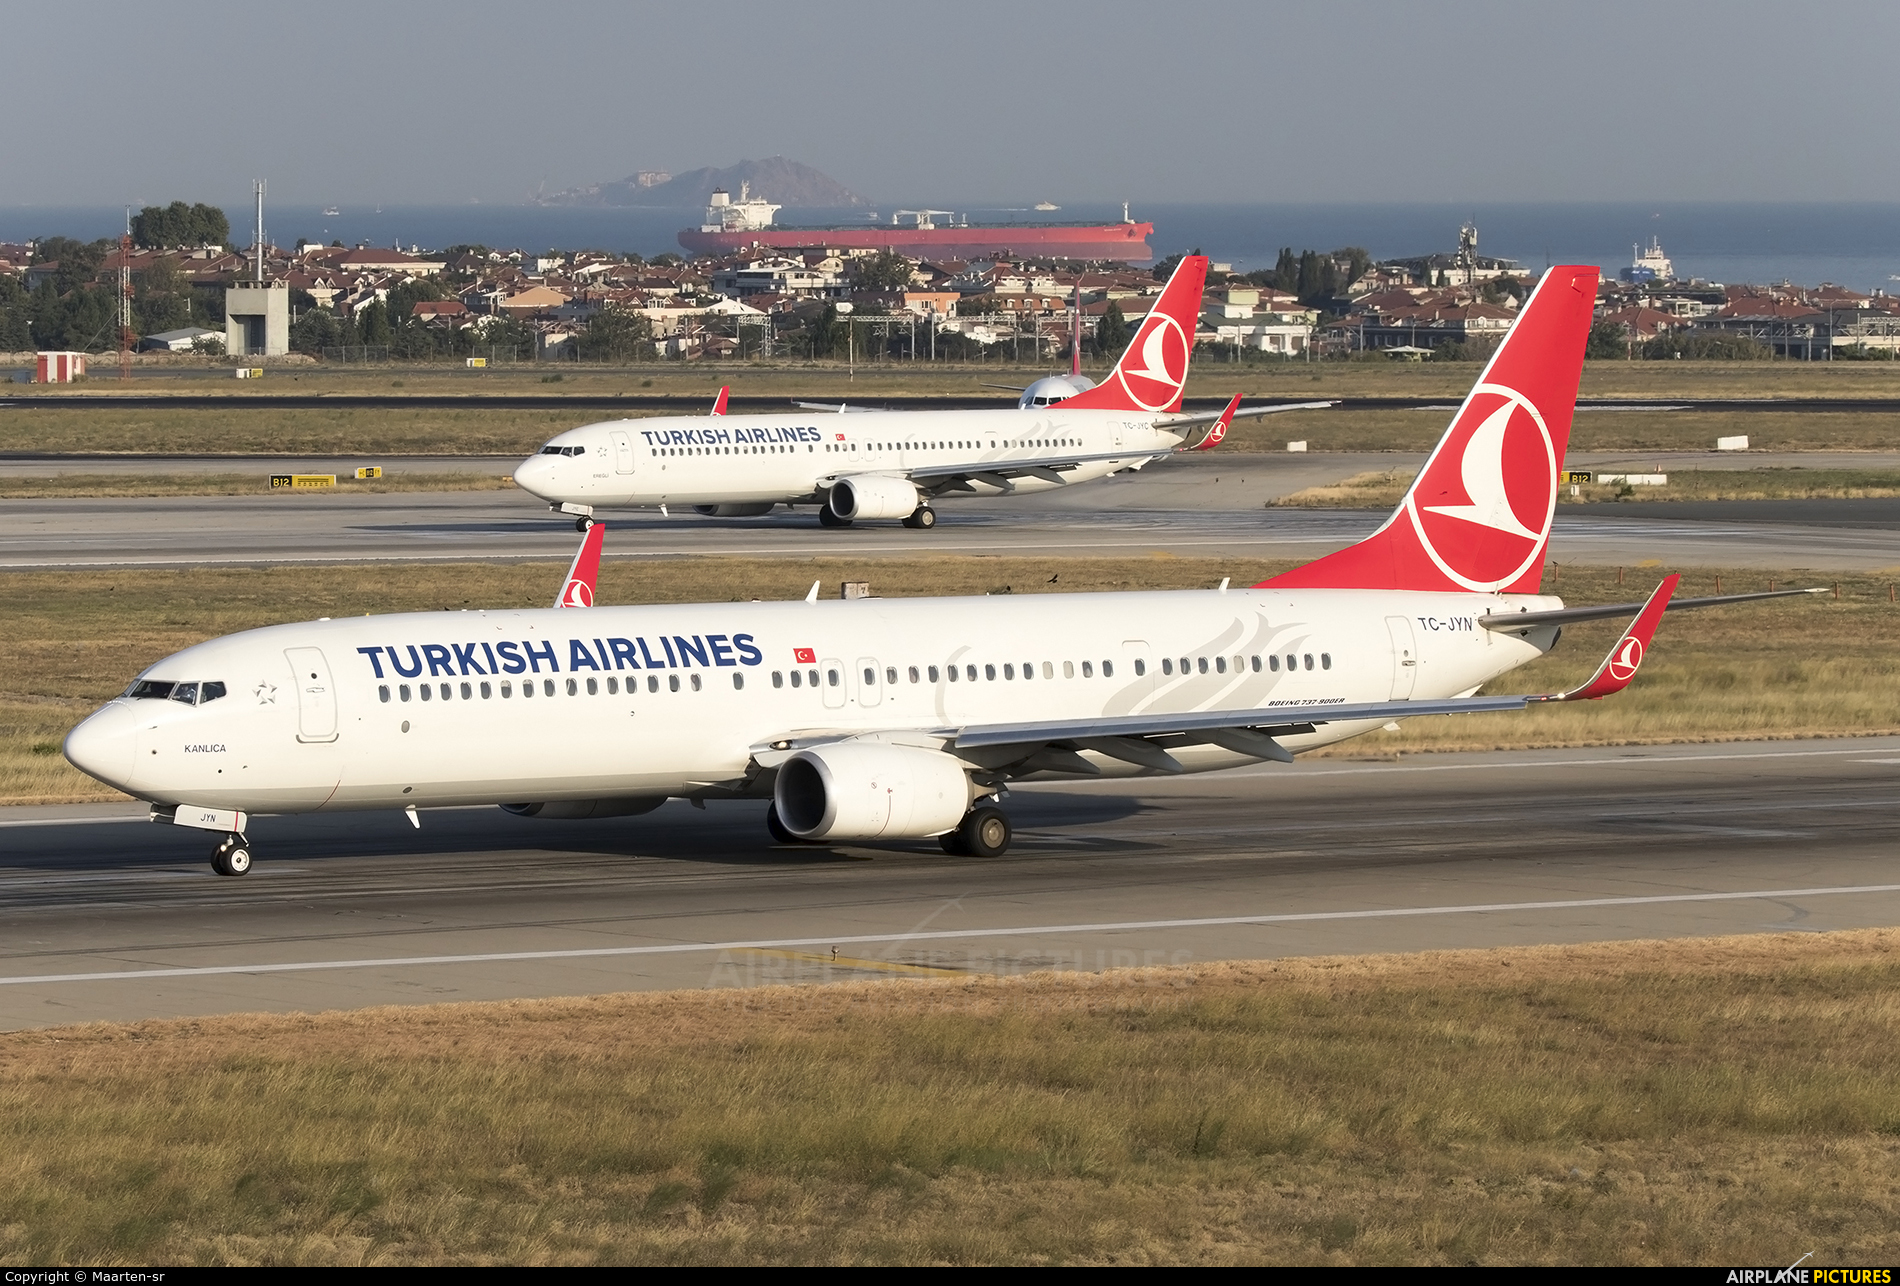 Turkish Airlines TC-JYN aircraft at Istanbul - Ataturk